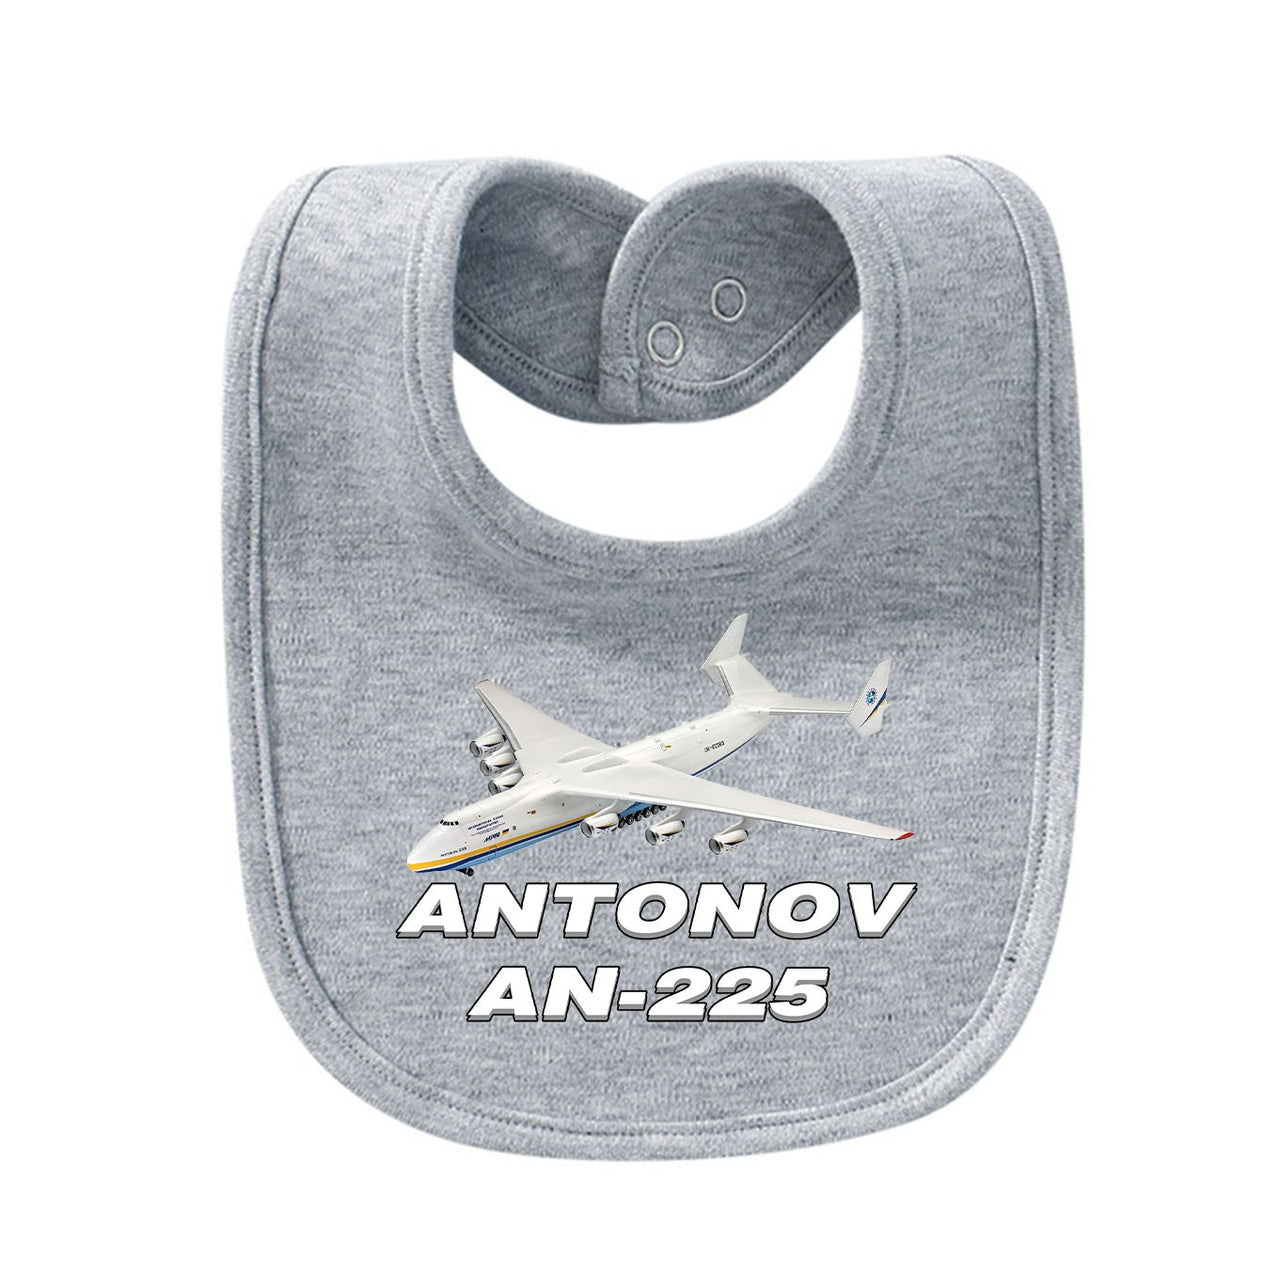 Antonov AN-225 (12) Designed Baby Saliva & Feeding Towels